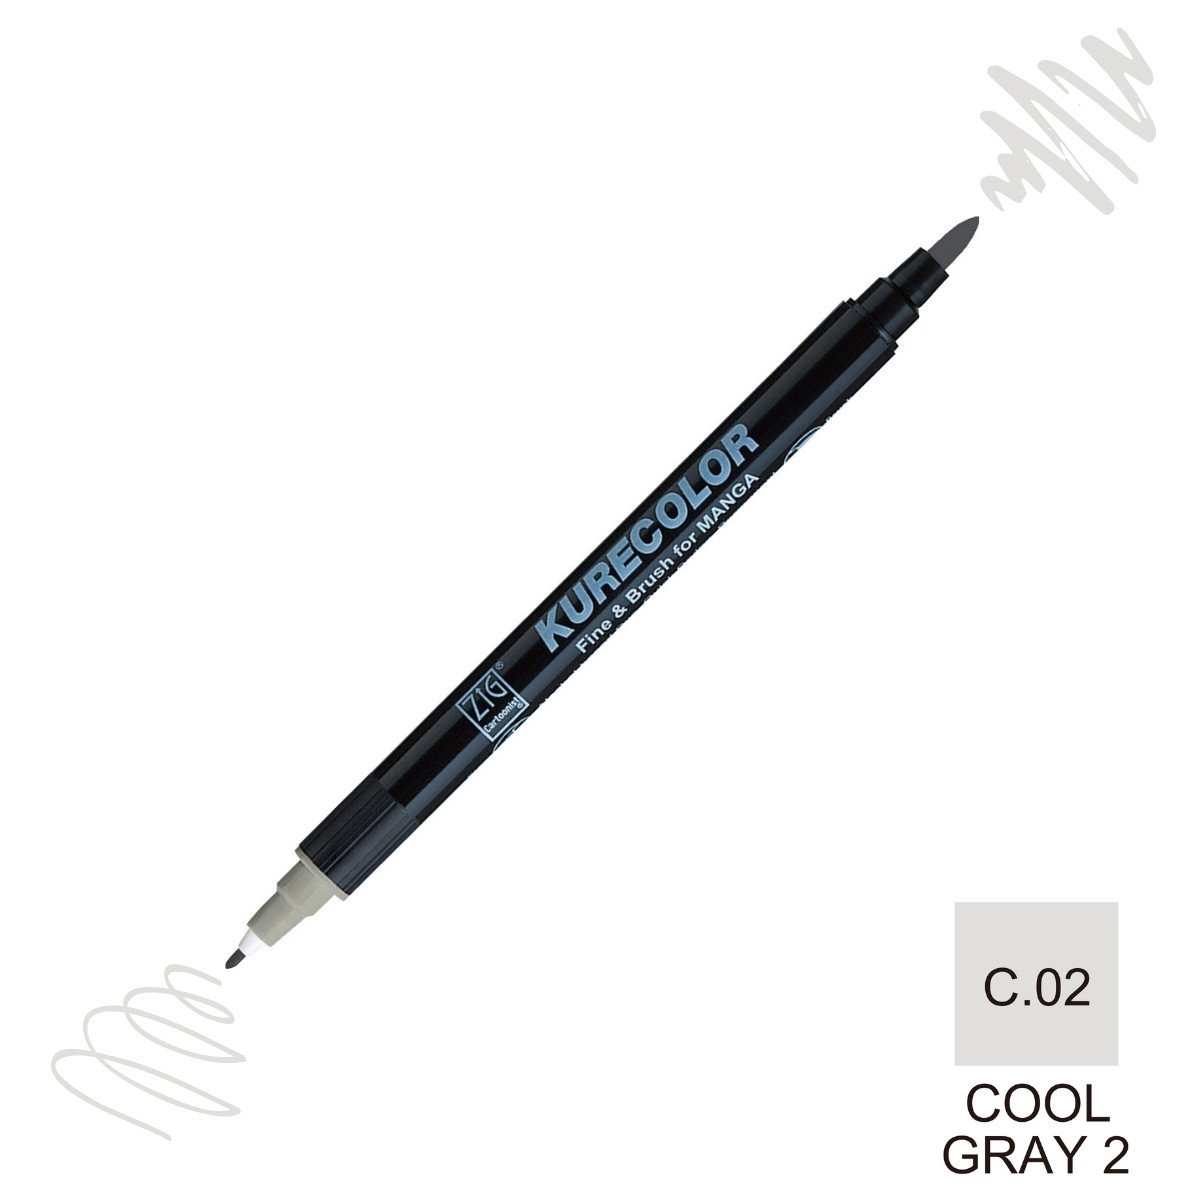 Zig Kurecolor Mangaka Fine&Brush Çift Taraflı Kalem CNKC-2200 No C.02 Cool Gray 2